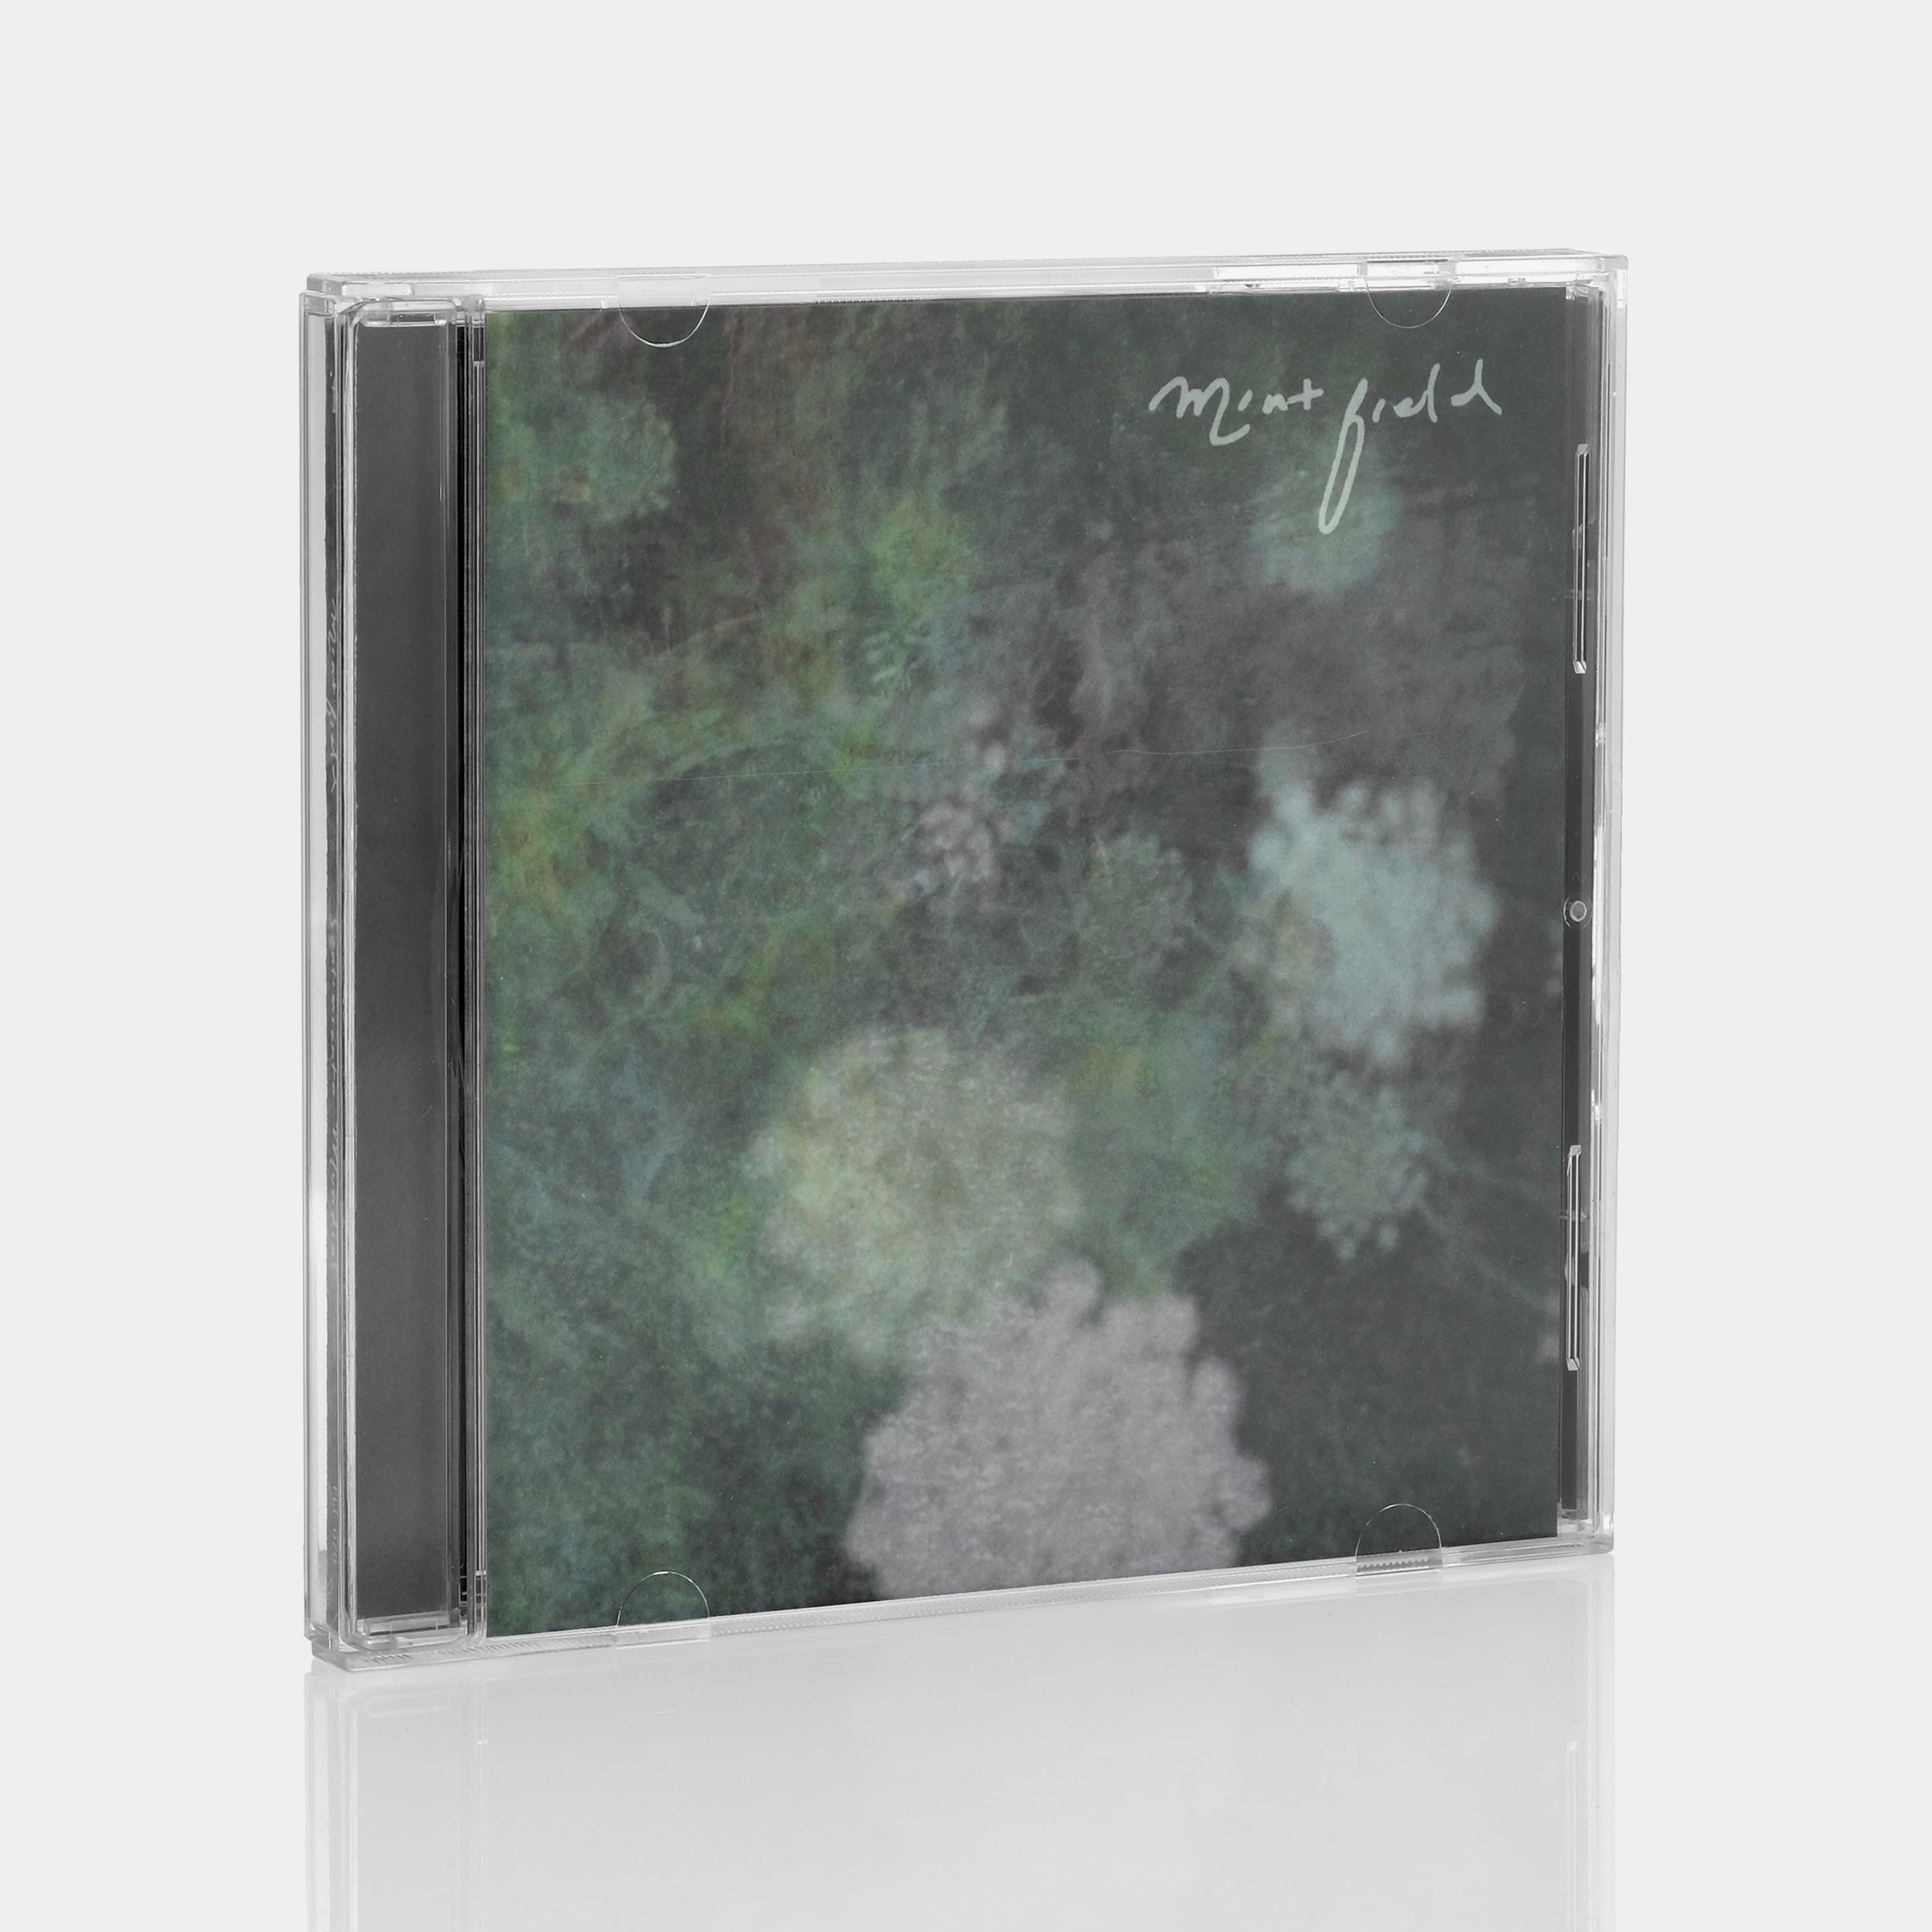 Mint Field - Sentimiento Mundial CD